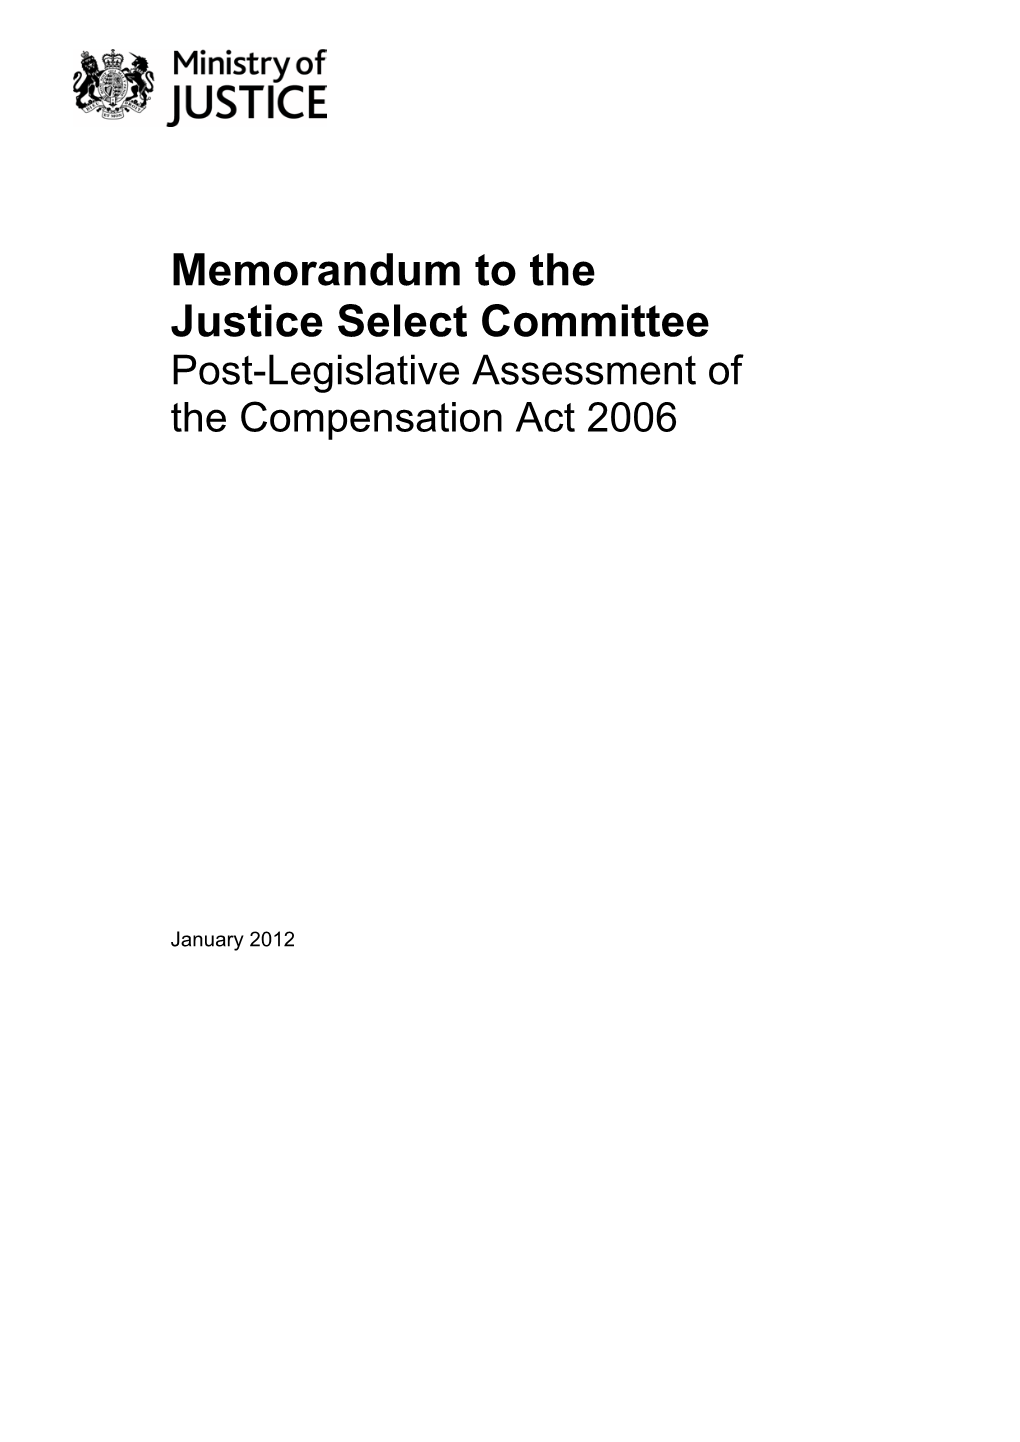 Post-Legislative Assessment of the Compensation Act 2006